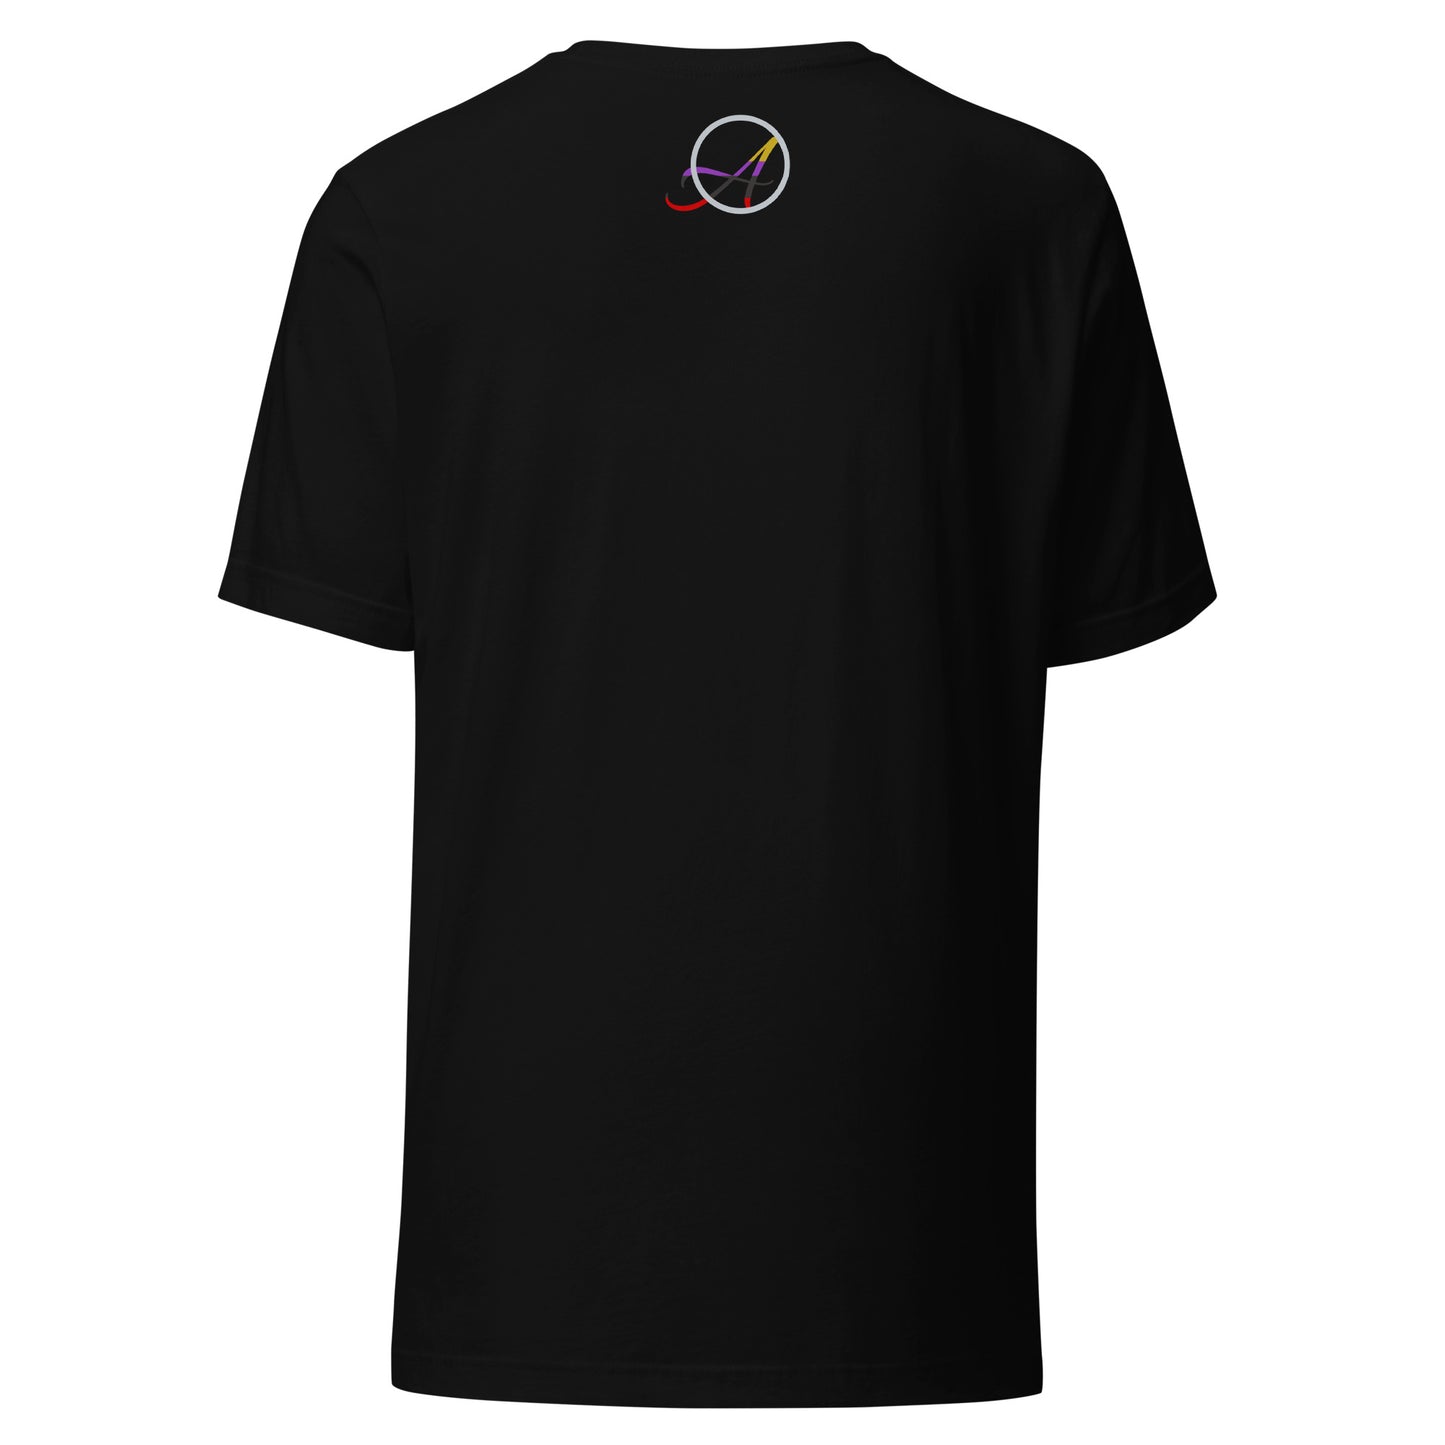 PERSPECTIVE Dark Unisex Short Sleeve T-Shirt